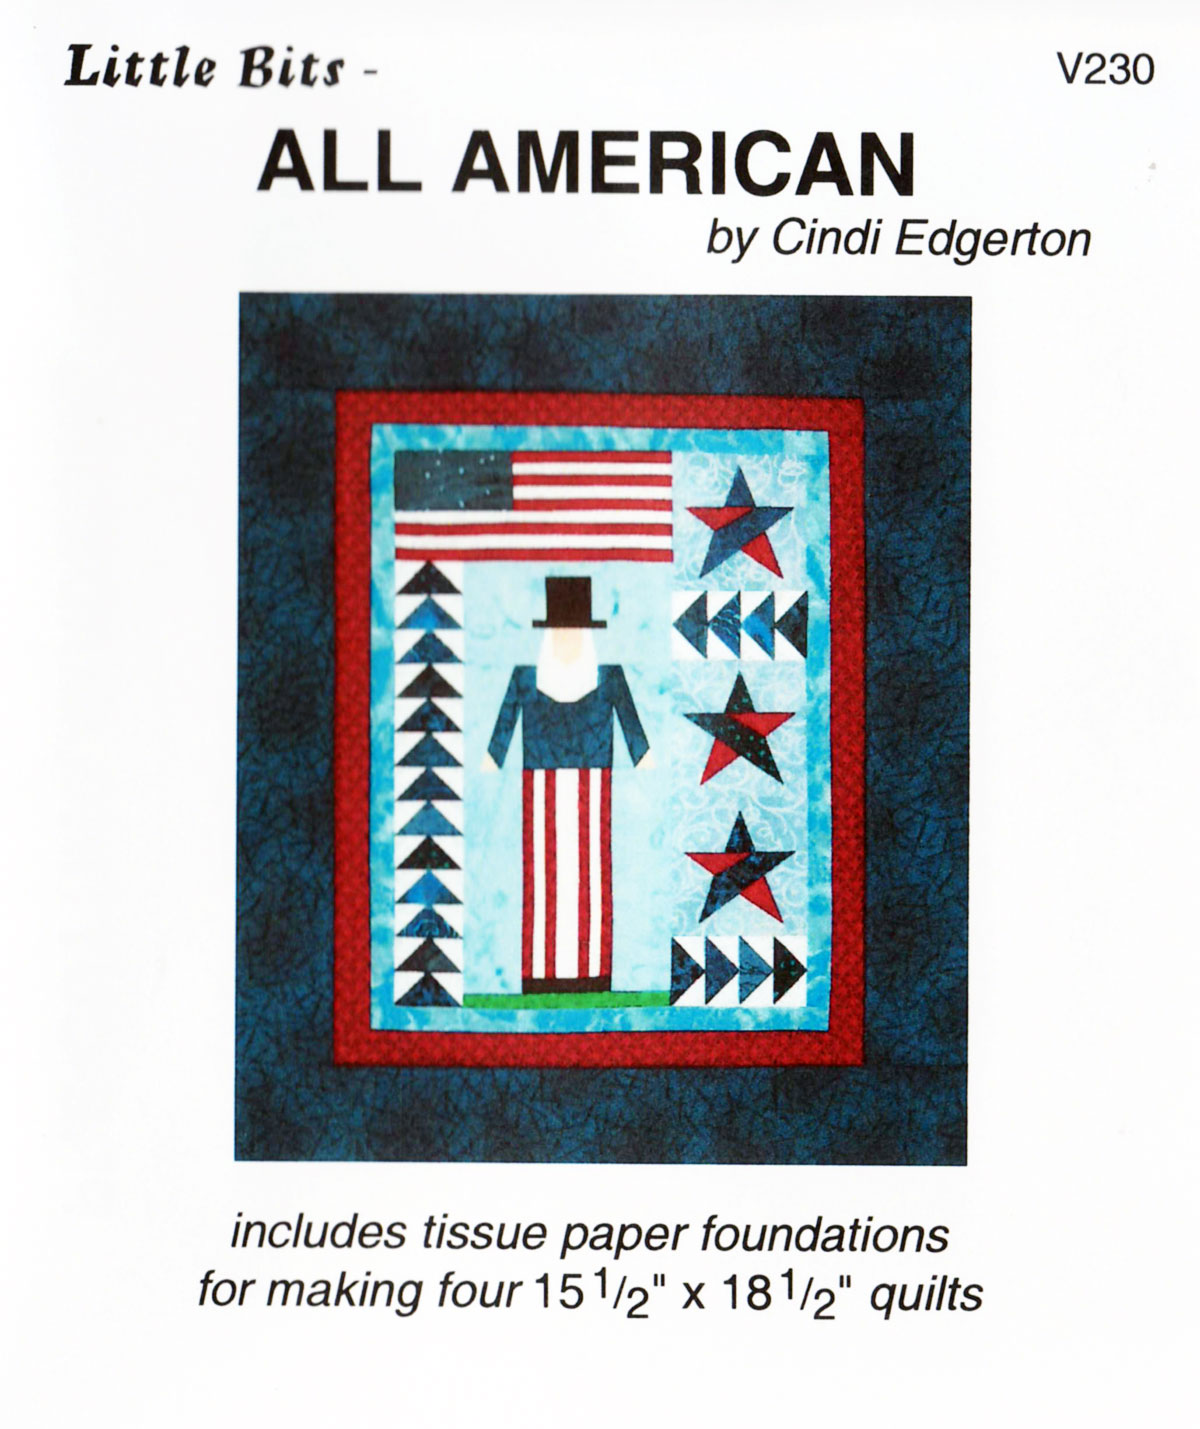 Little-Bits-All-Amercian-quilt-sewing-pattern-Cindi-Edgerton-front